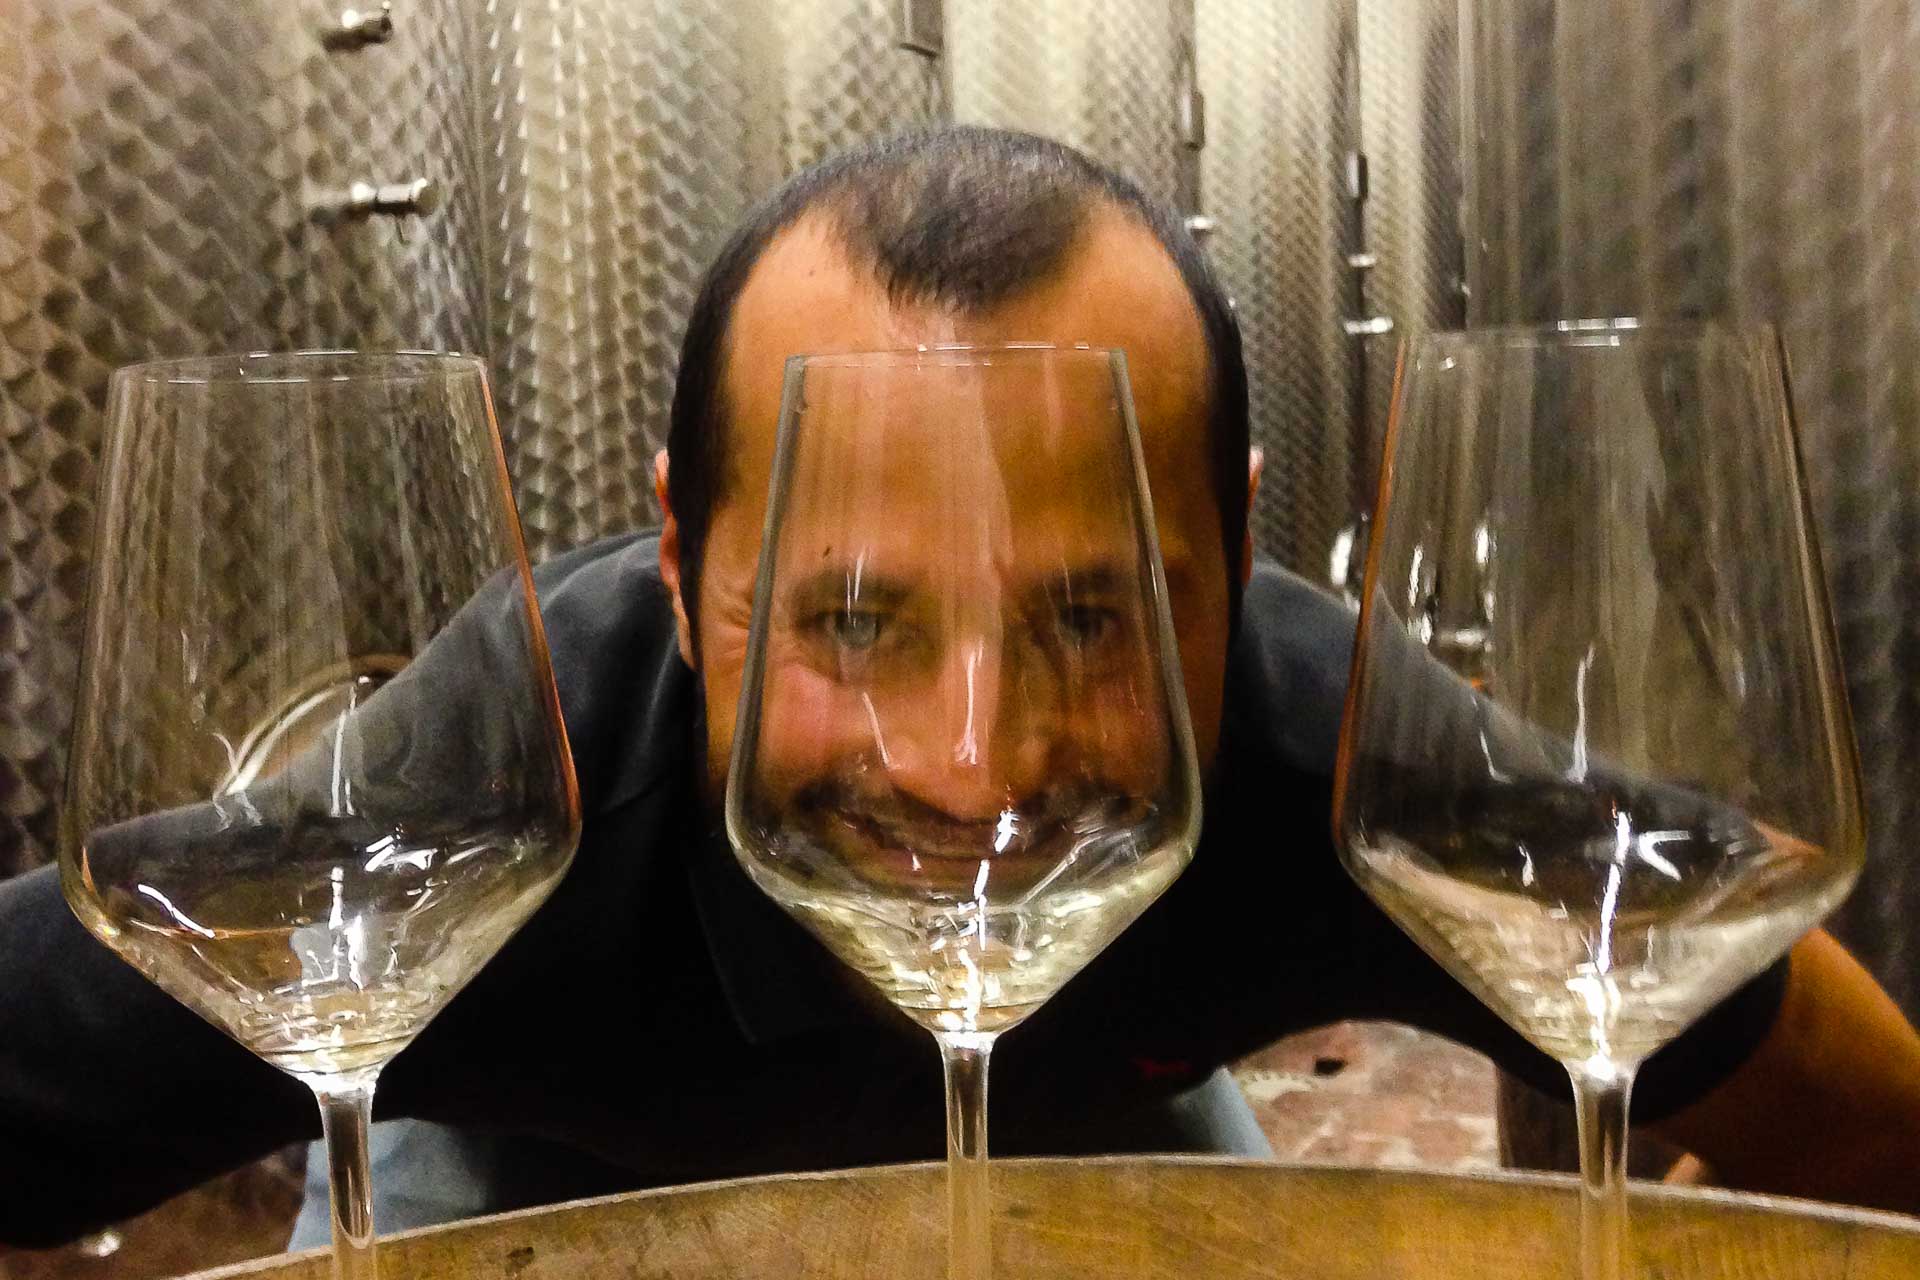 Tiago looking through wine glasses in a cellar in Brda Slovenia